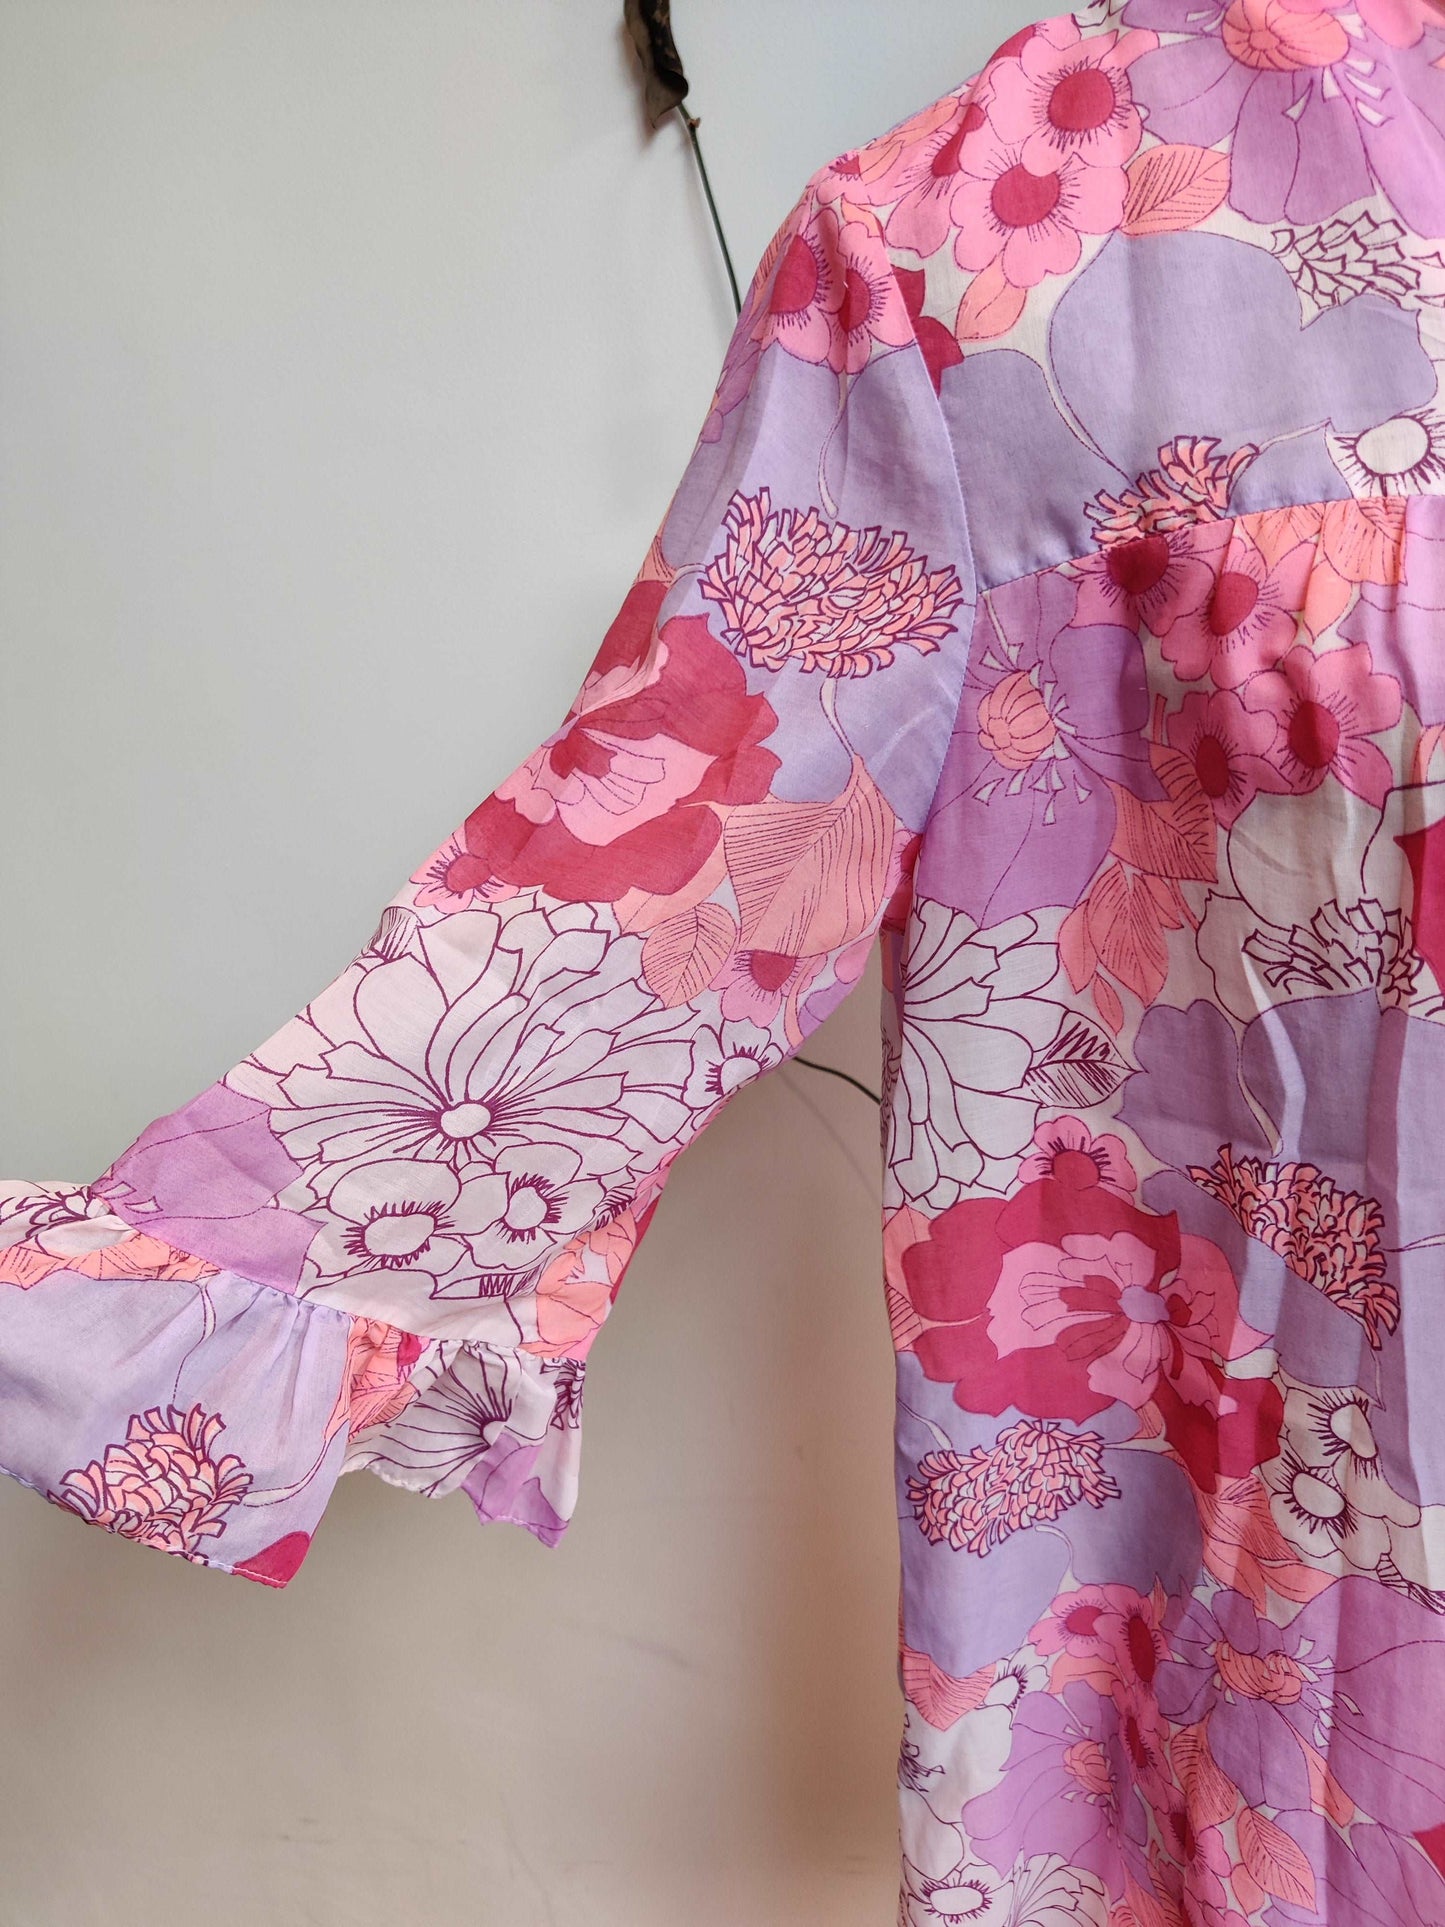 Beautiful vintage pink floral house coat dress.